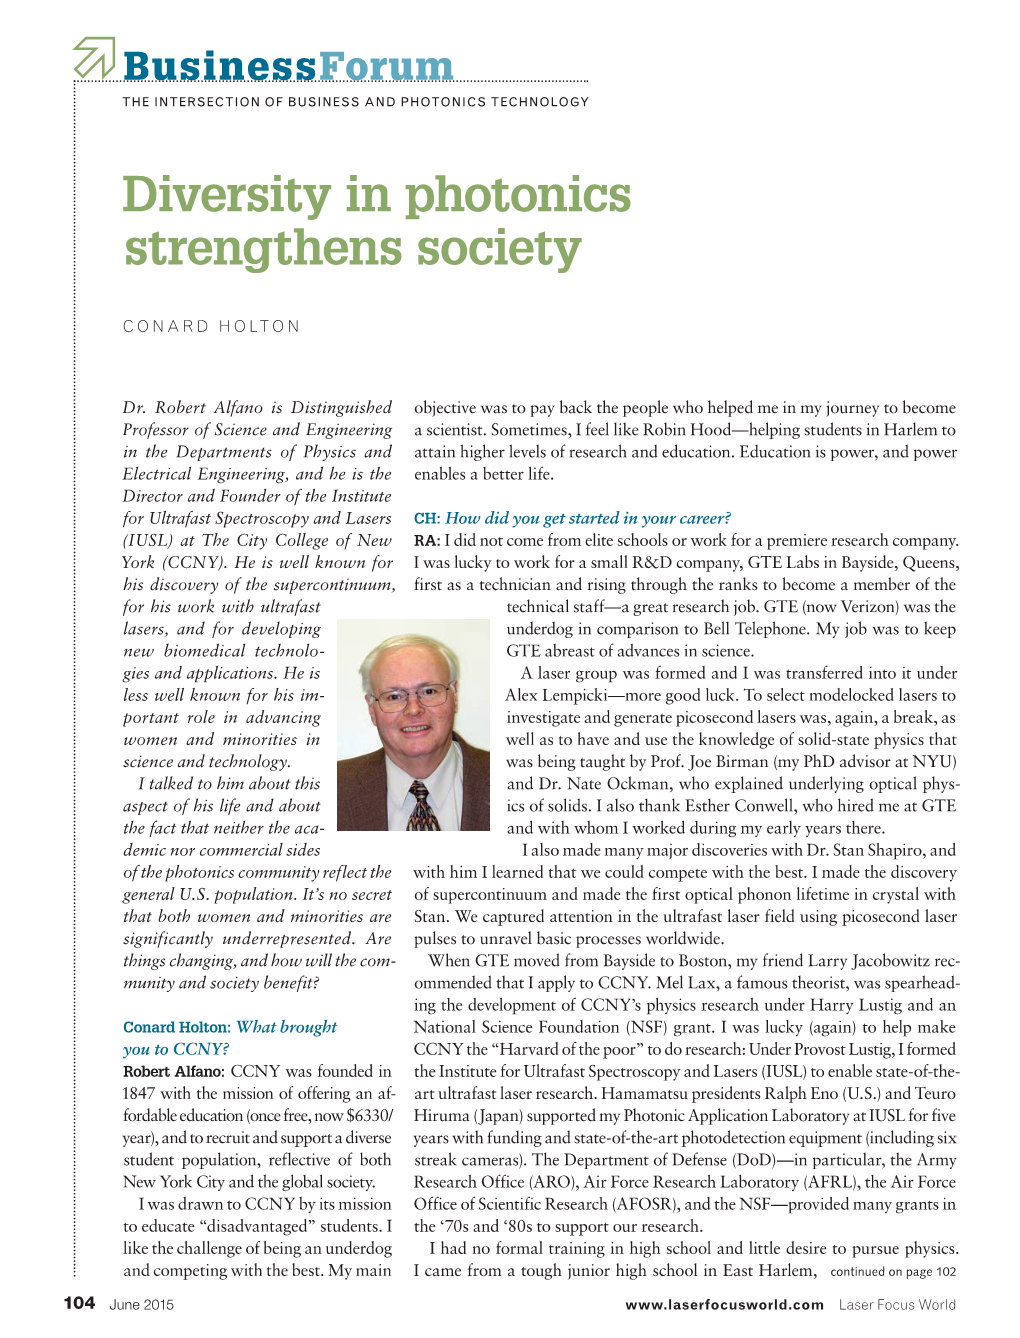 Diversity in Photonics Strengthens Society